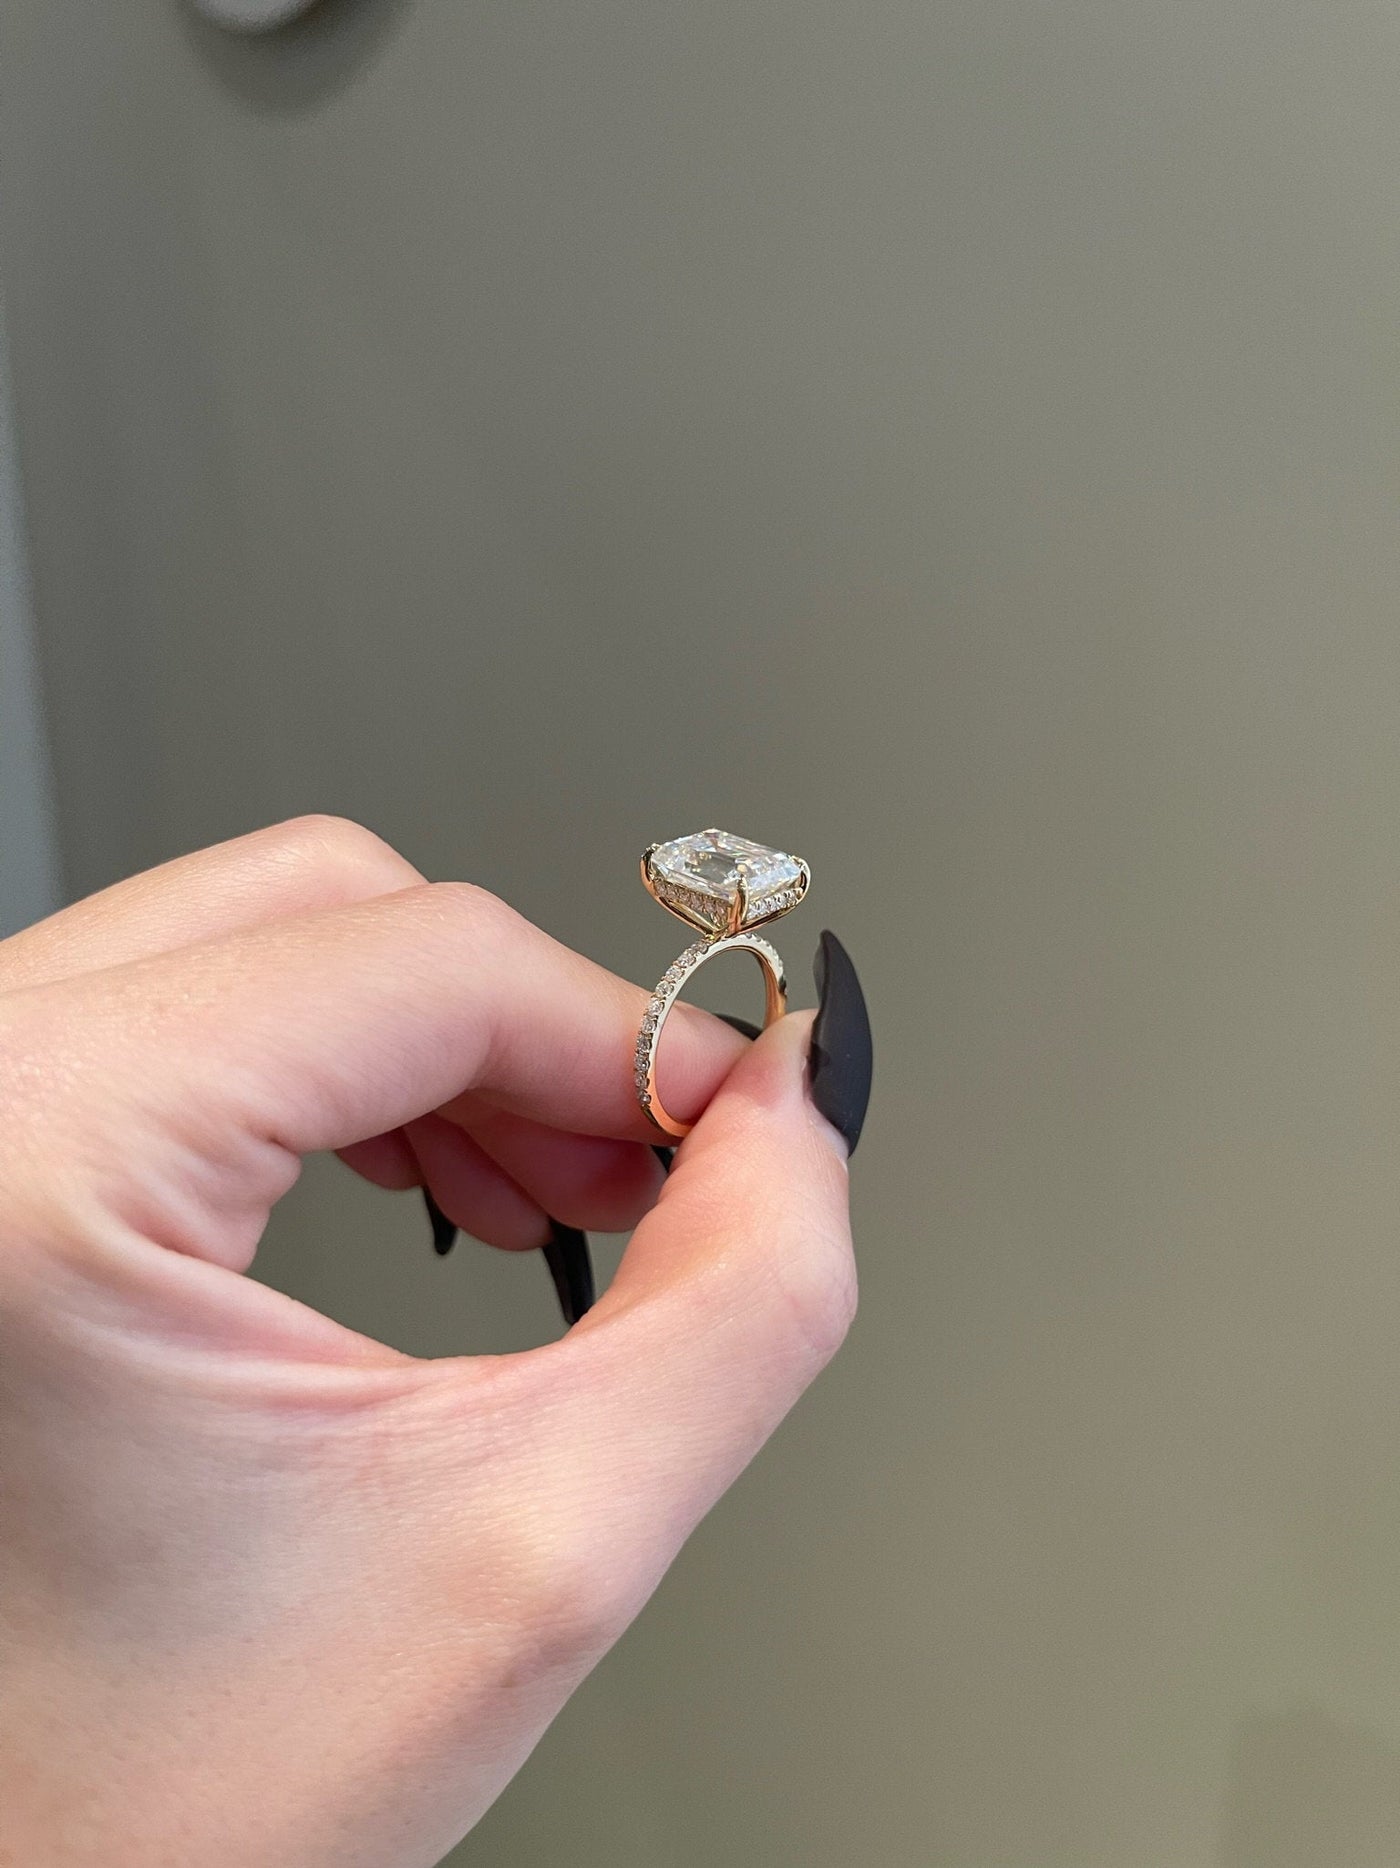 5.0ct Emerald Cut Hidden Halo Pave Moissanite Diamond Engagement Ring